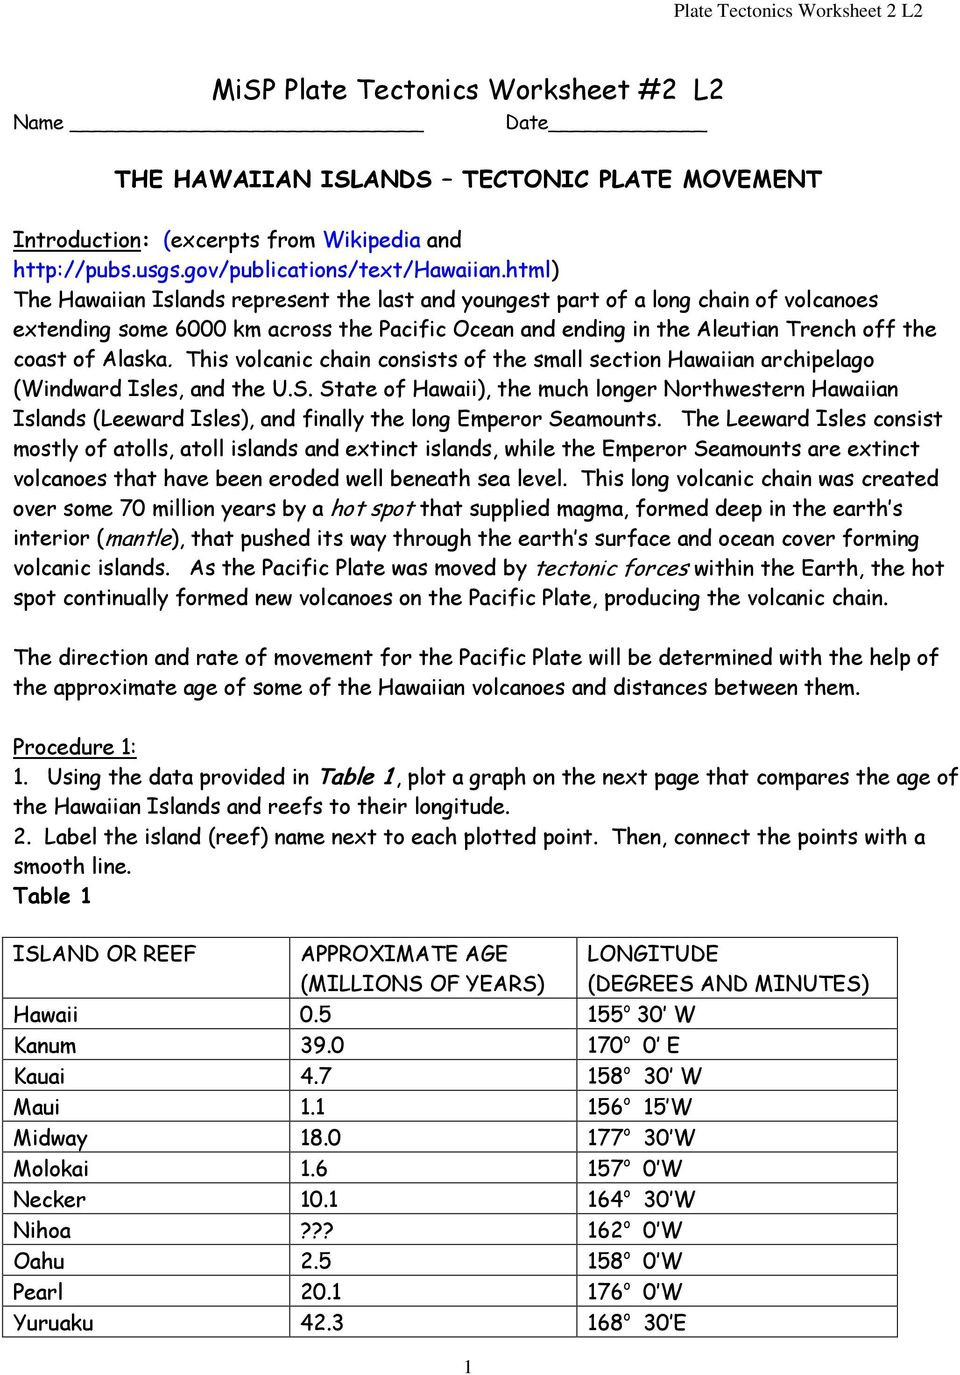 Plate Tectonics Worksheet Answers Misp Plate Tectonics Worksheet 2 L2 Pdf Free Download